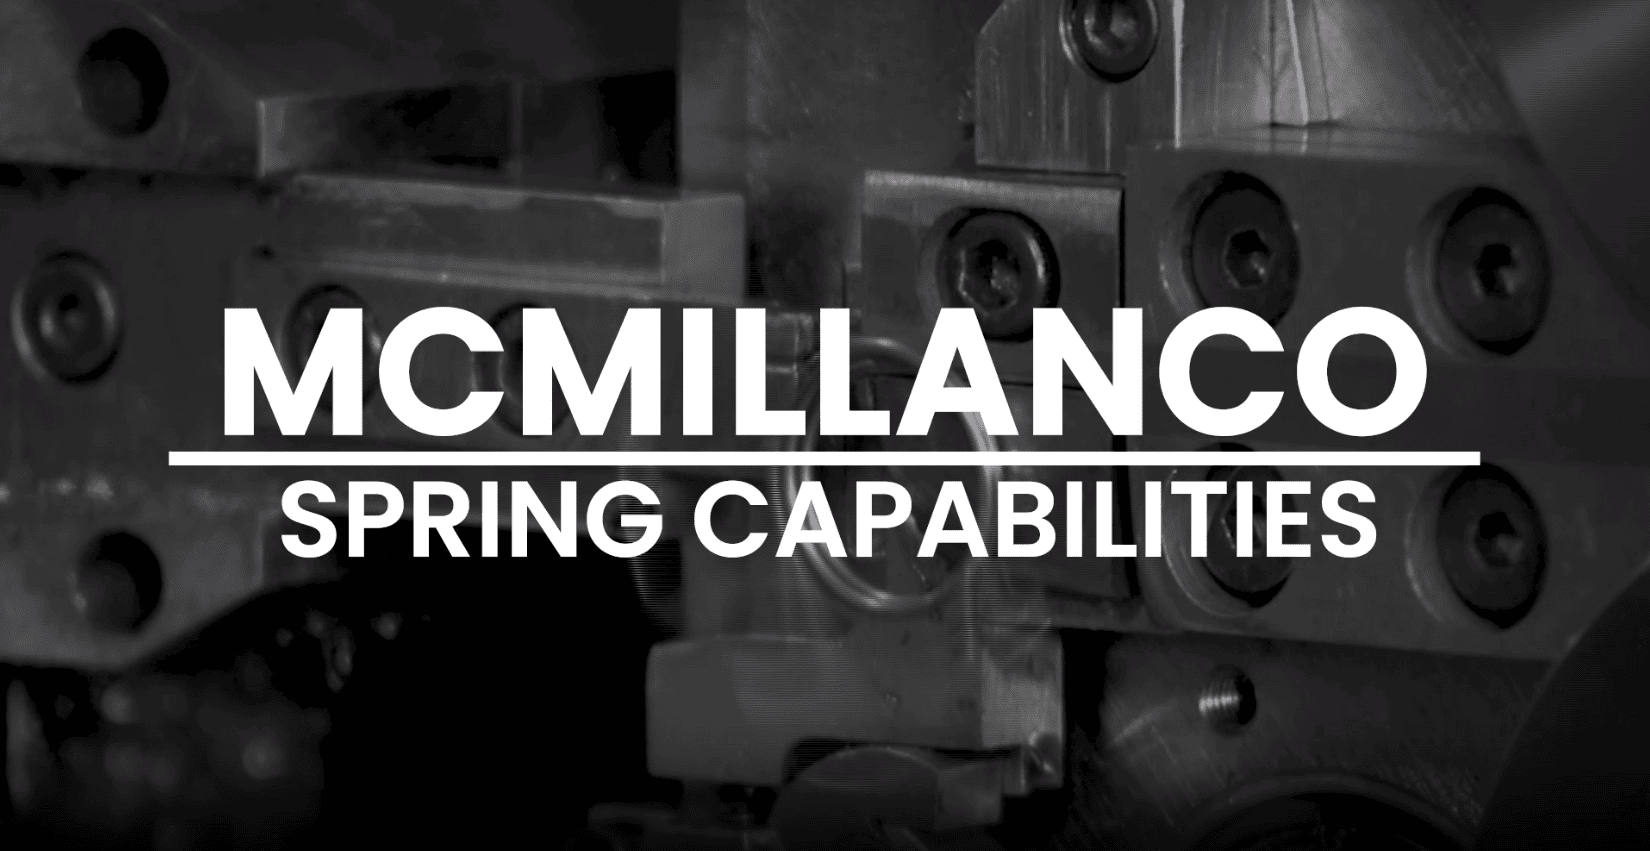 MCMILLANCO Spring Capabilities